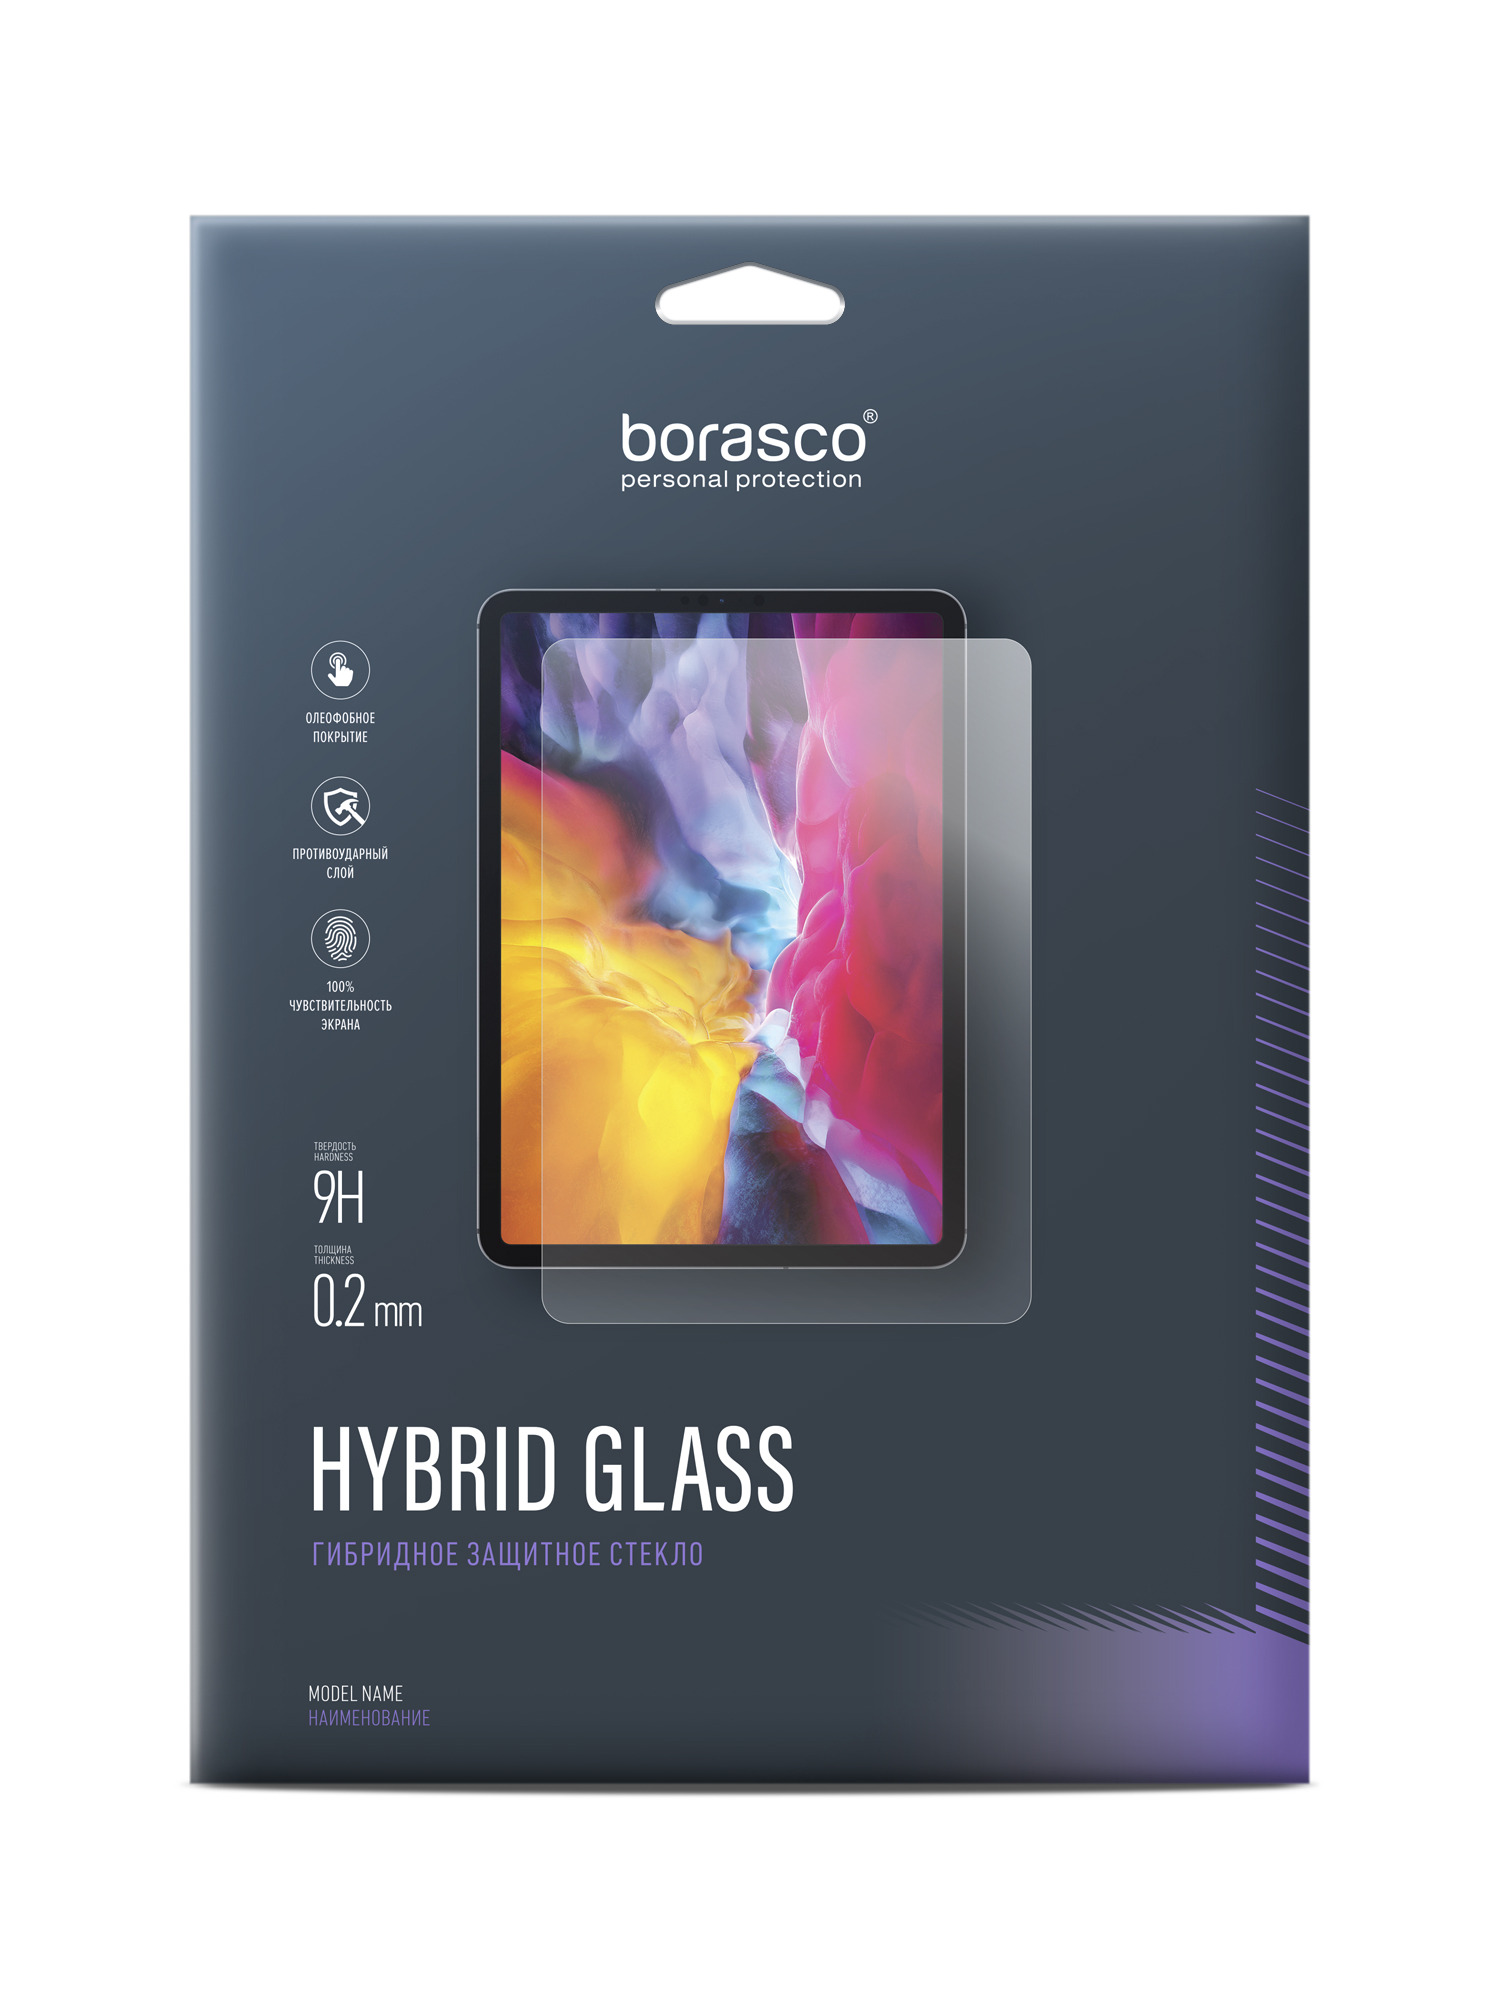 Защитное стекло Hybrid Glass для Huawei MediaPad M5 Lite 10 защитное стекло для планшета huawei mediapad t5 10 10 1 дюйма t3 m5 m6 t10 t8 2 шт